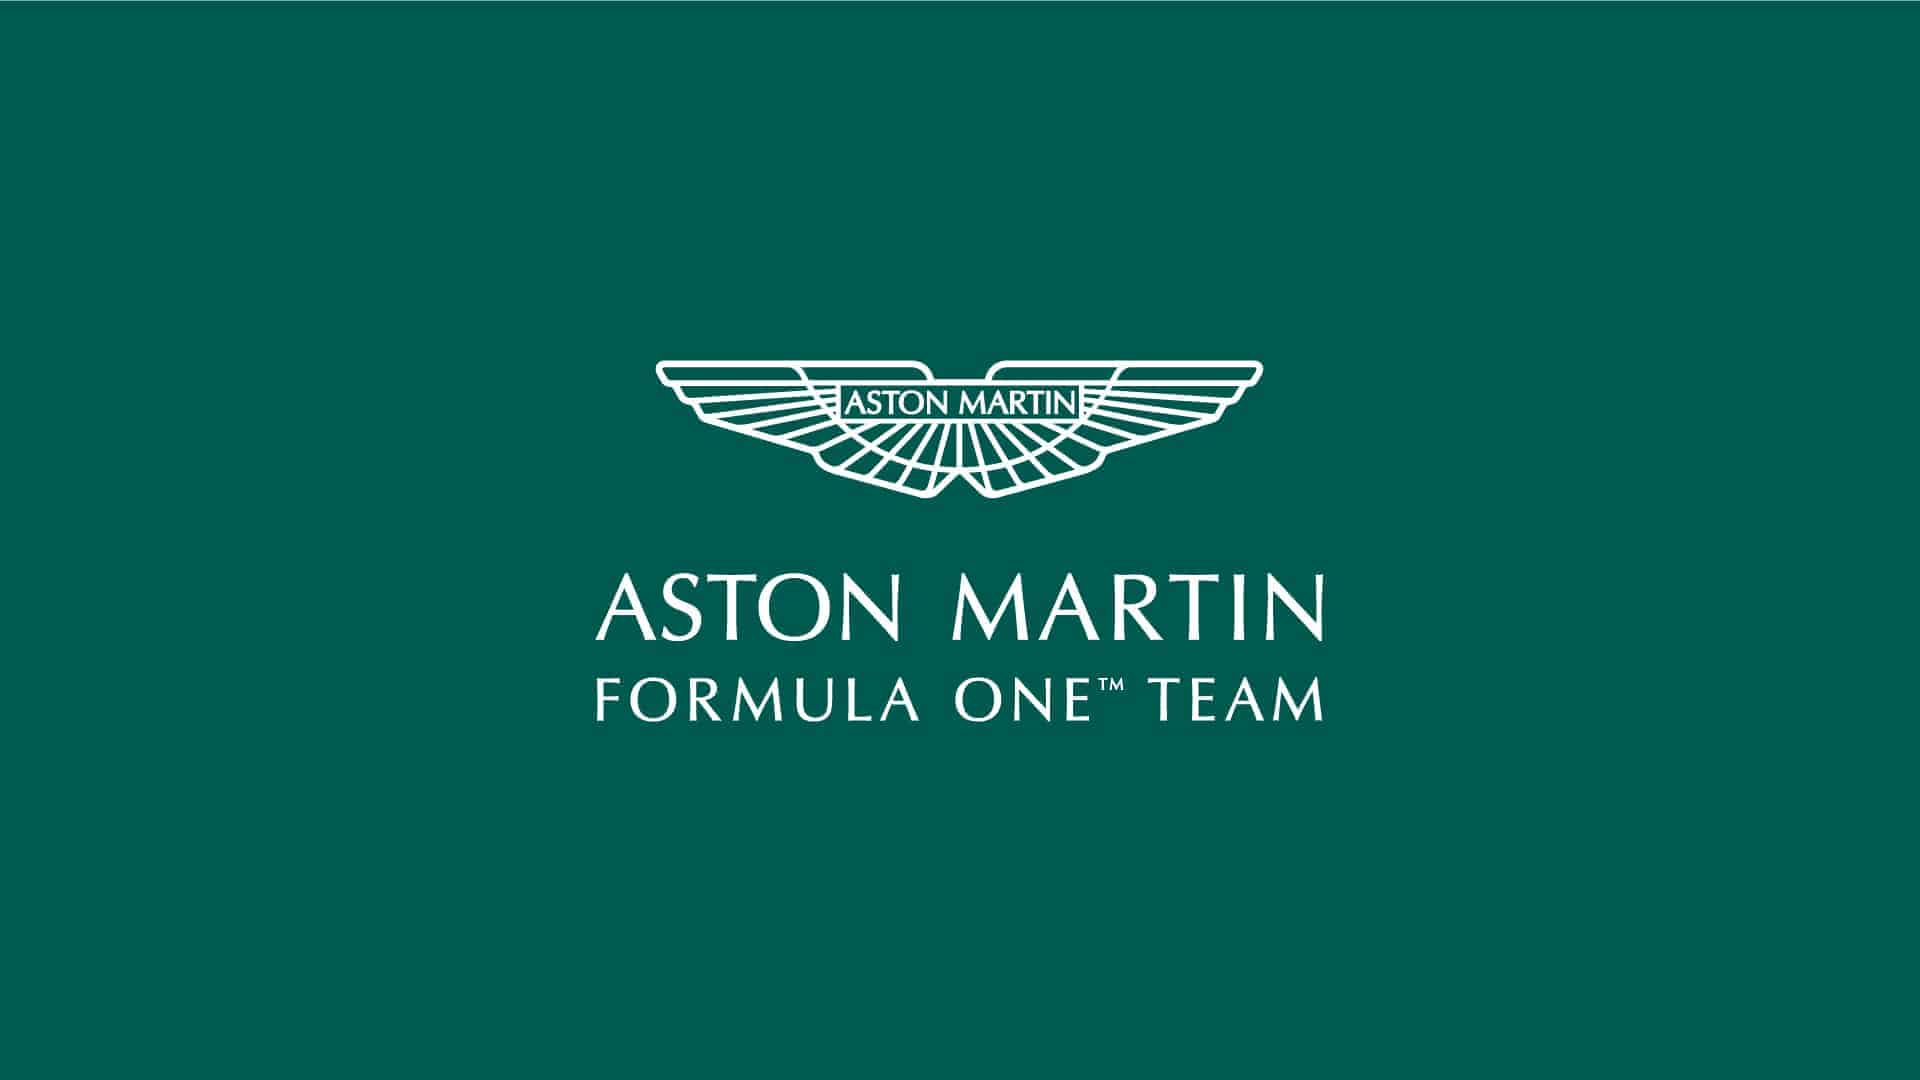 Aston Martin reveals Team logo ahead of F1 return